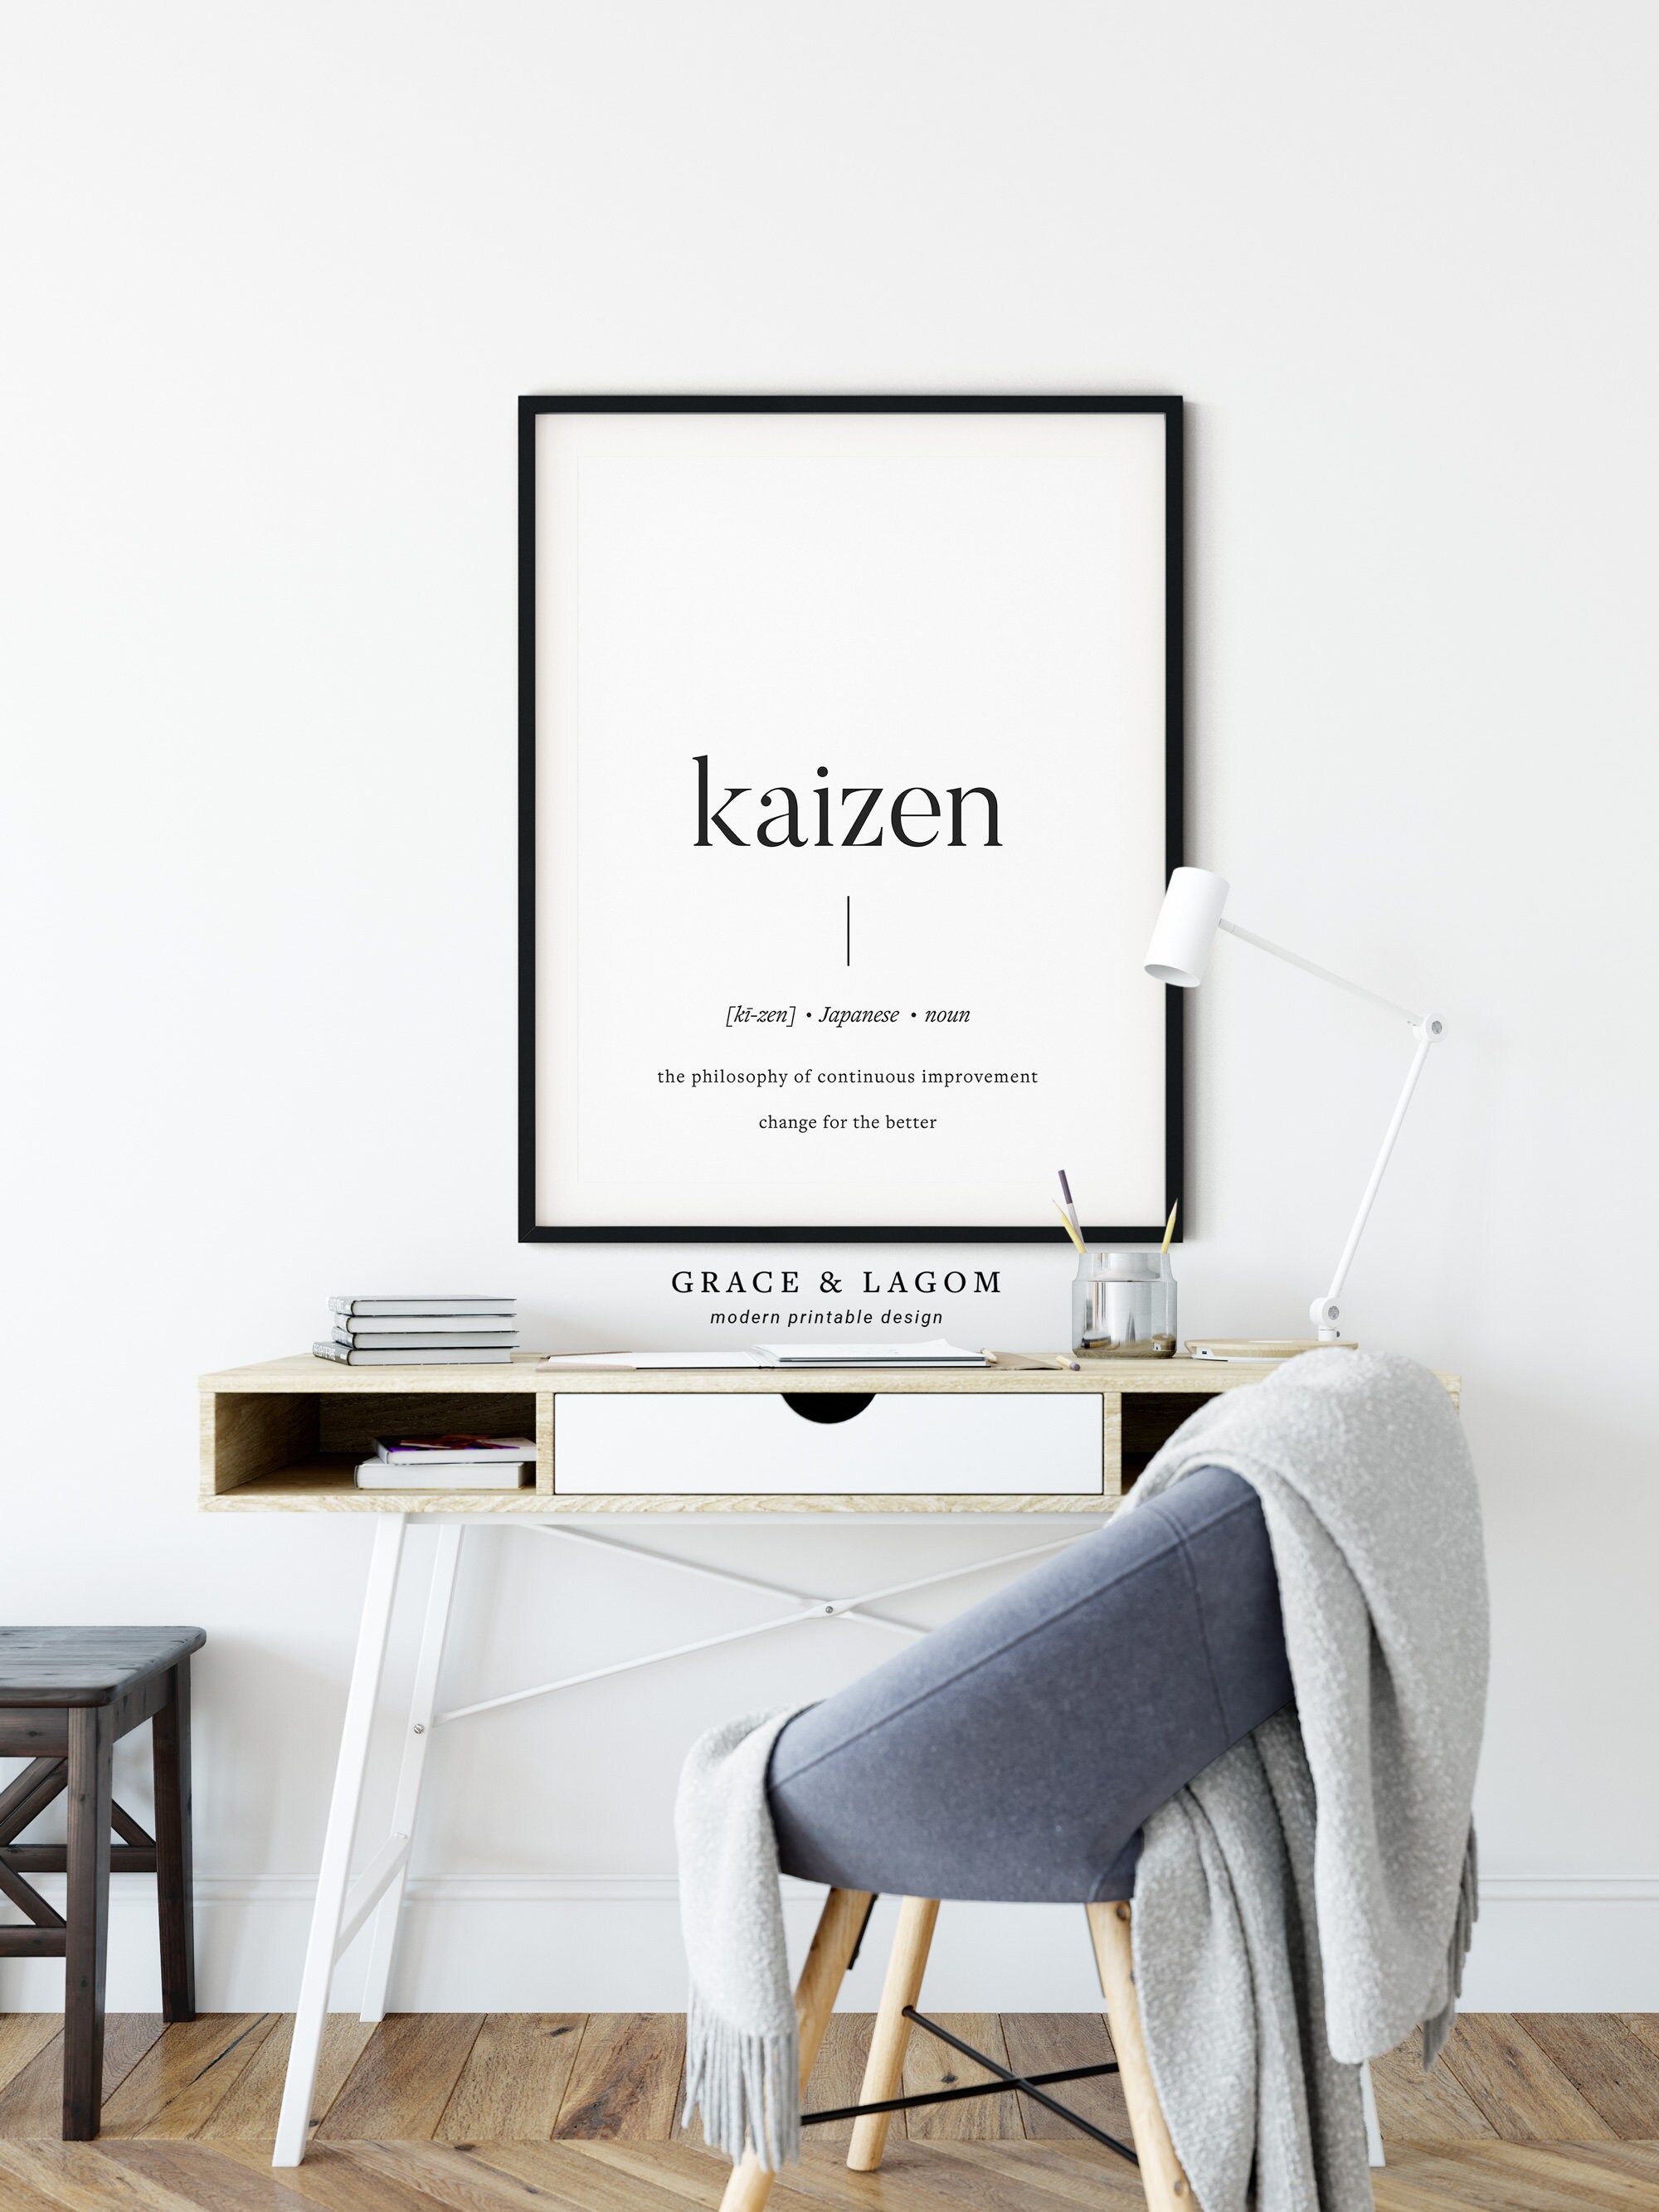 FiFi Dictionary Definition - Kaigozen - Digital Art, Humor & Satire, Signs  & Sayings - ArtPal